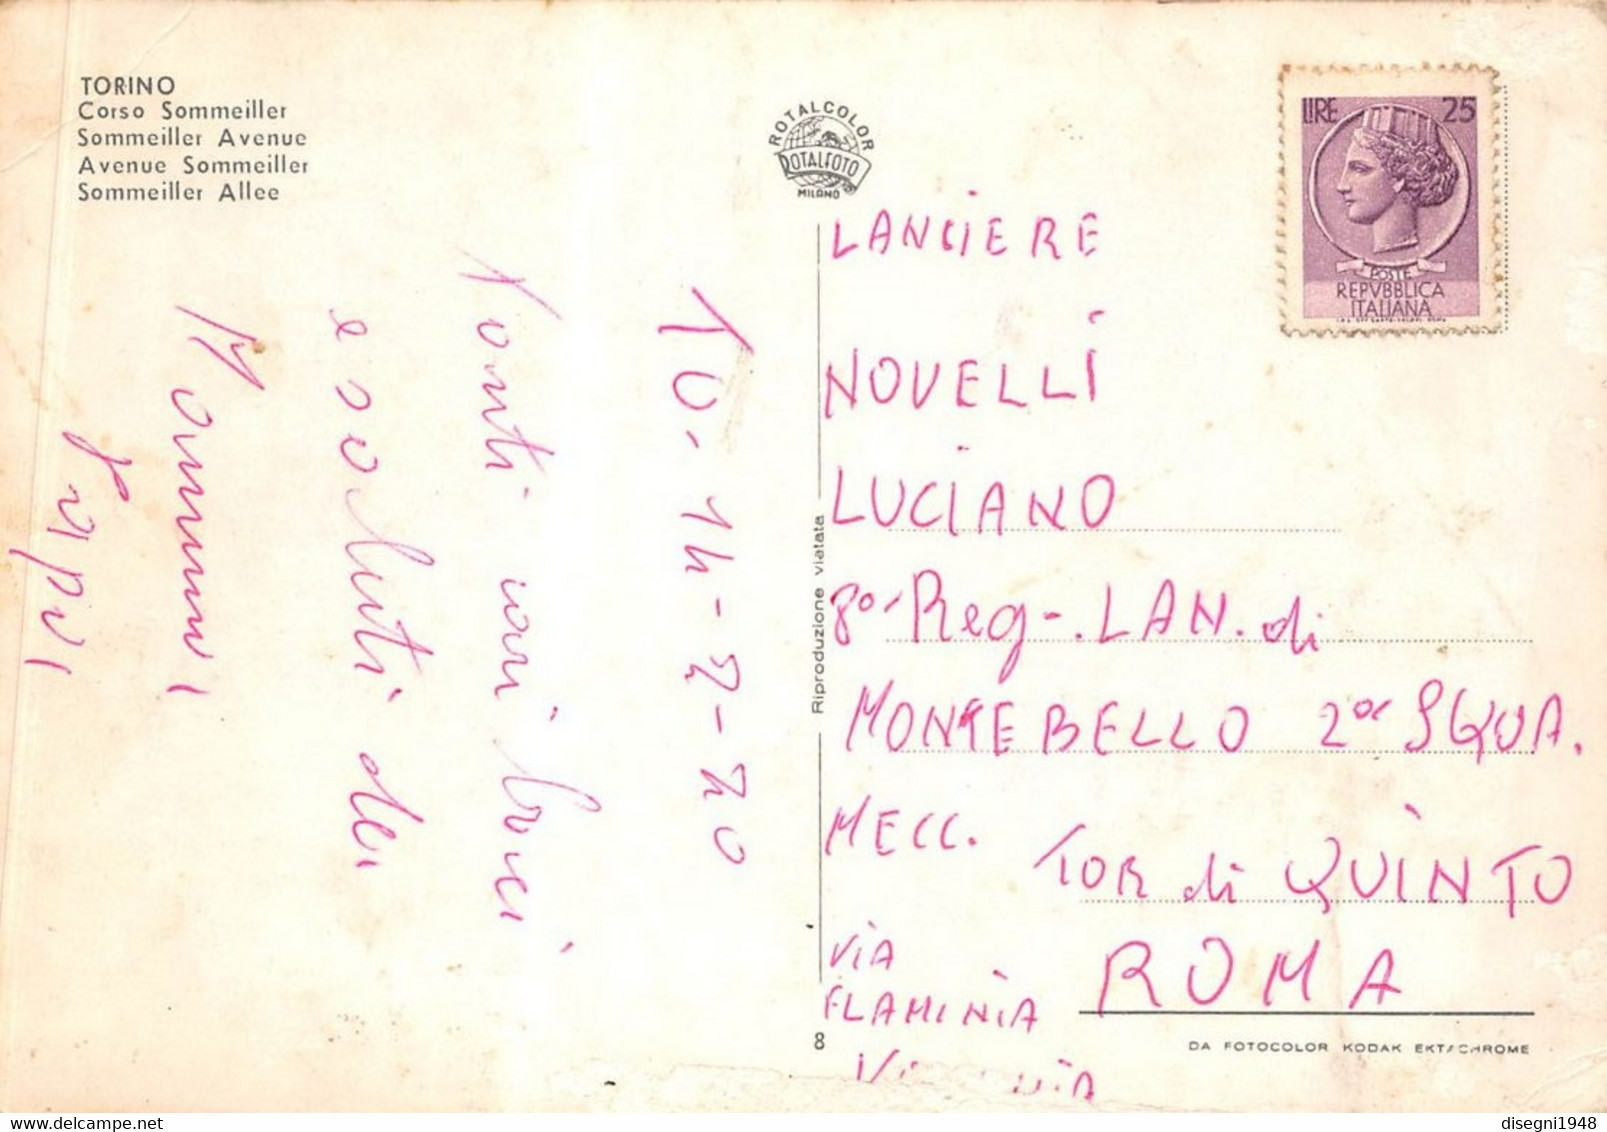 011856 "TORINO - CORSO SOMMEILLER"  CART. ILLUSTR. ORIG. SPED. 1970 - Panoramic Views